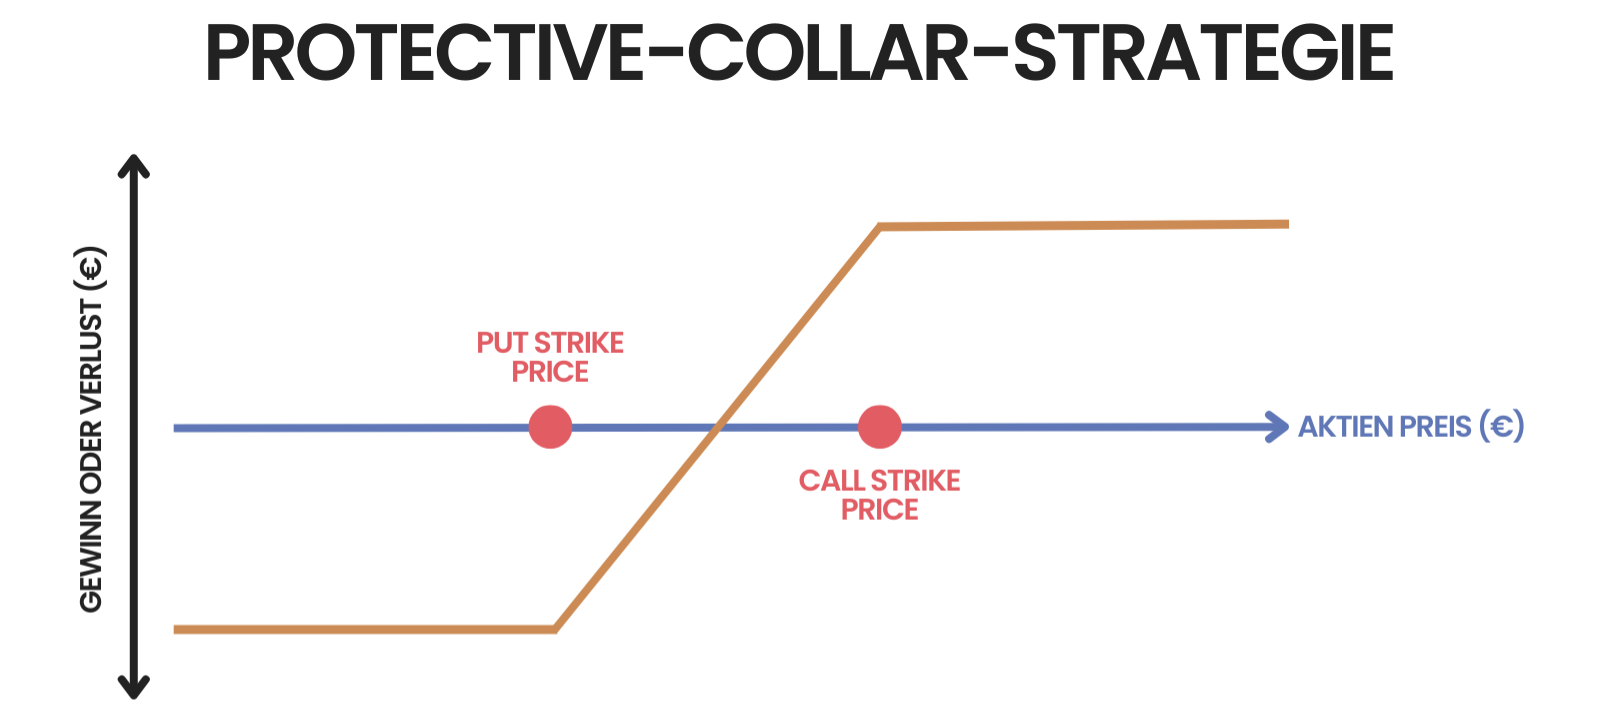 Protective-Collar-Strategie